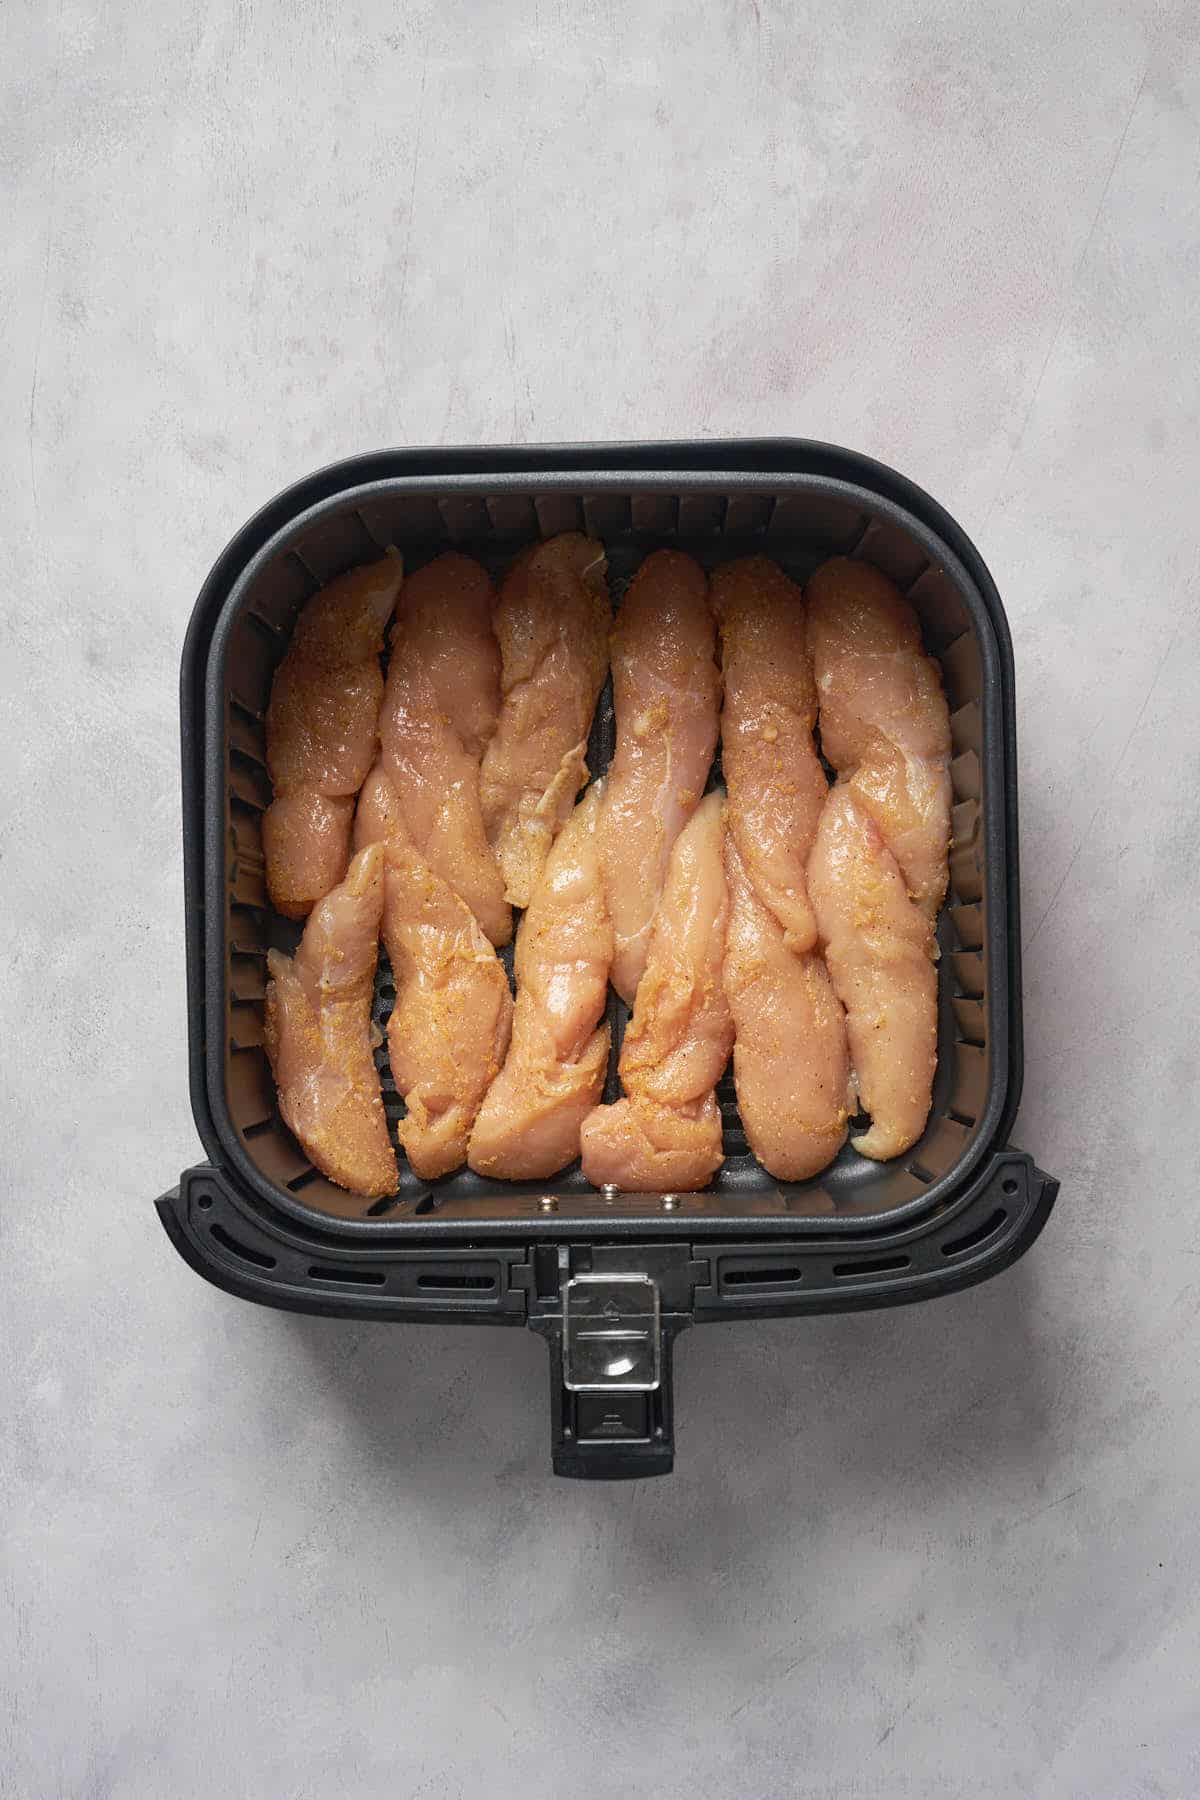 Uncooked chicken tenders in the air fryer basket.